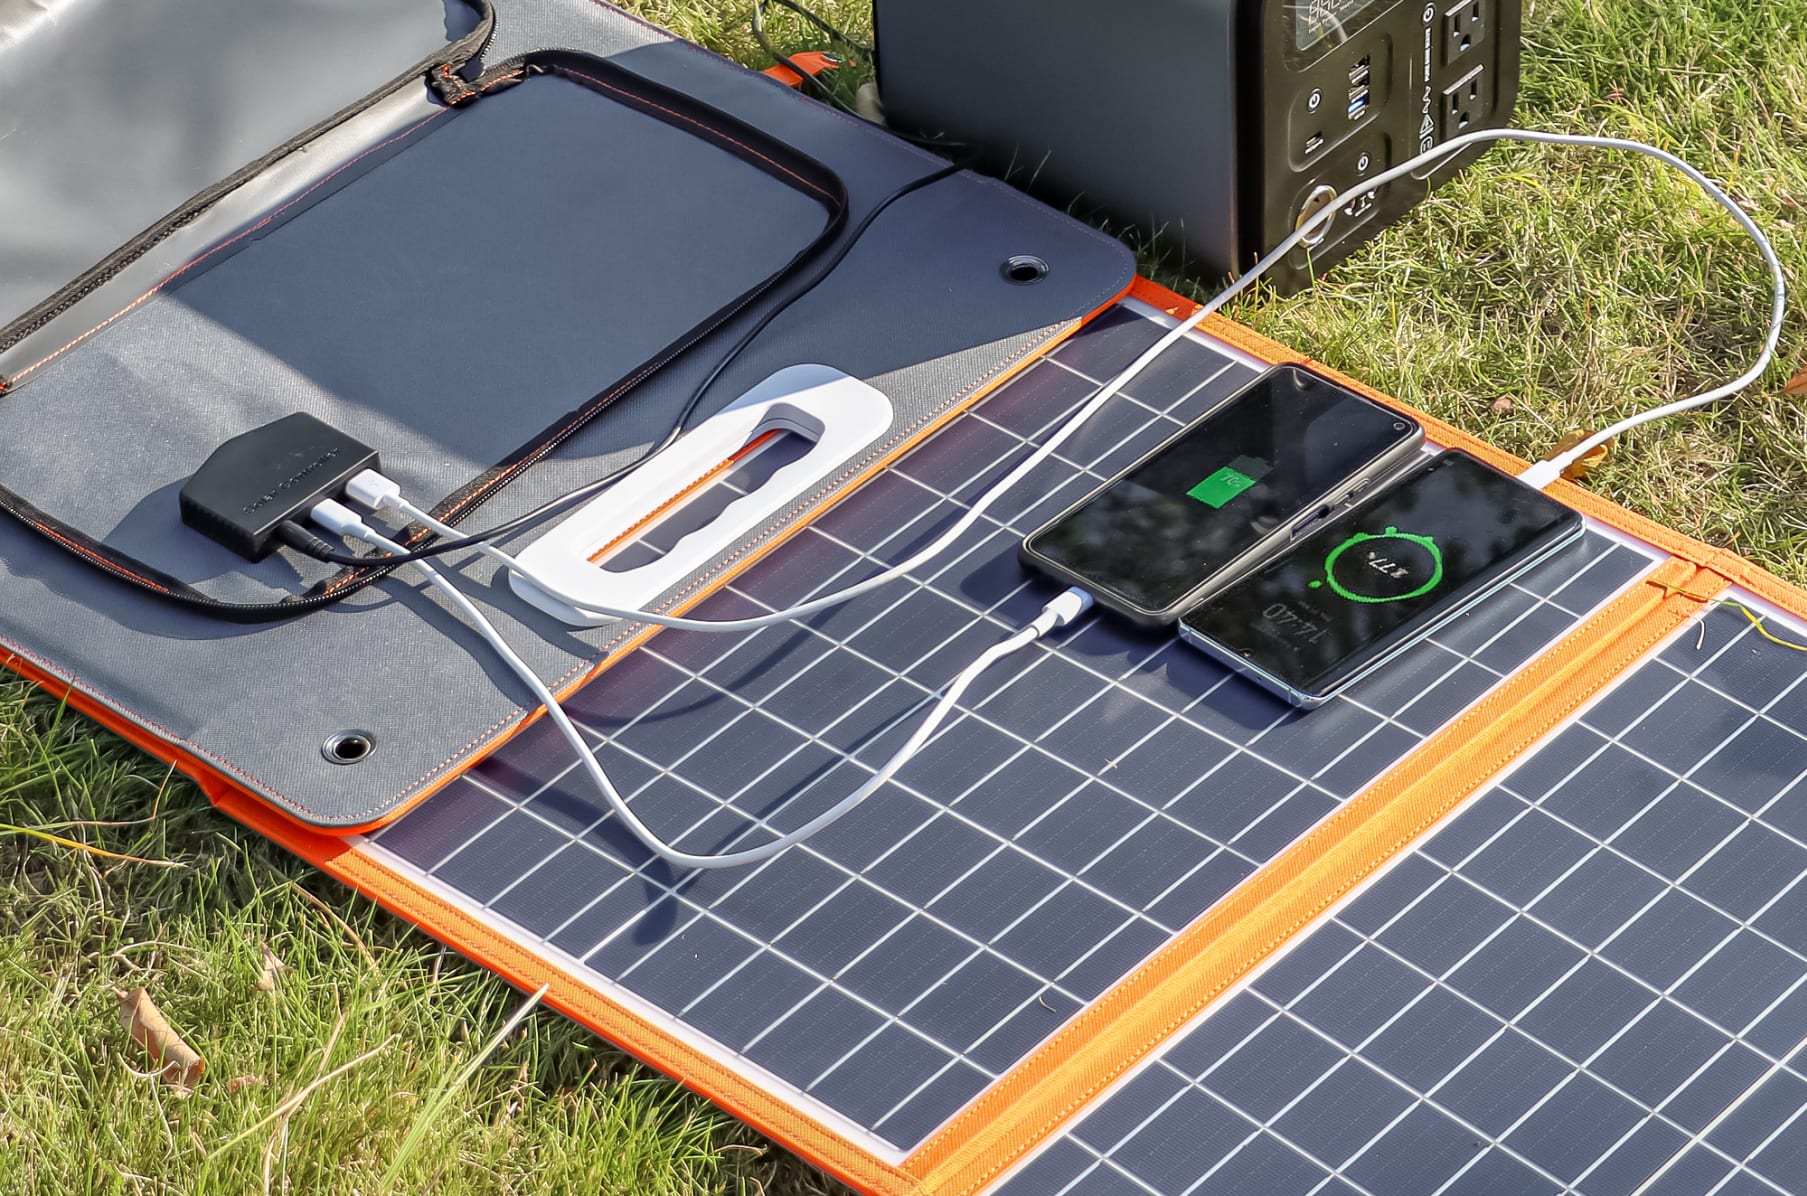 Mobile solar panel 100W / 18V / 5.6A